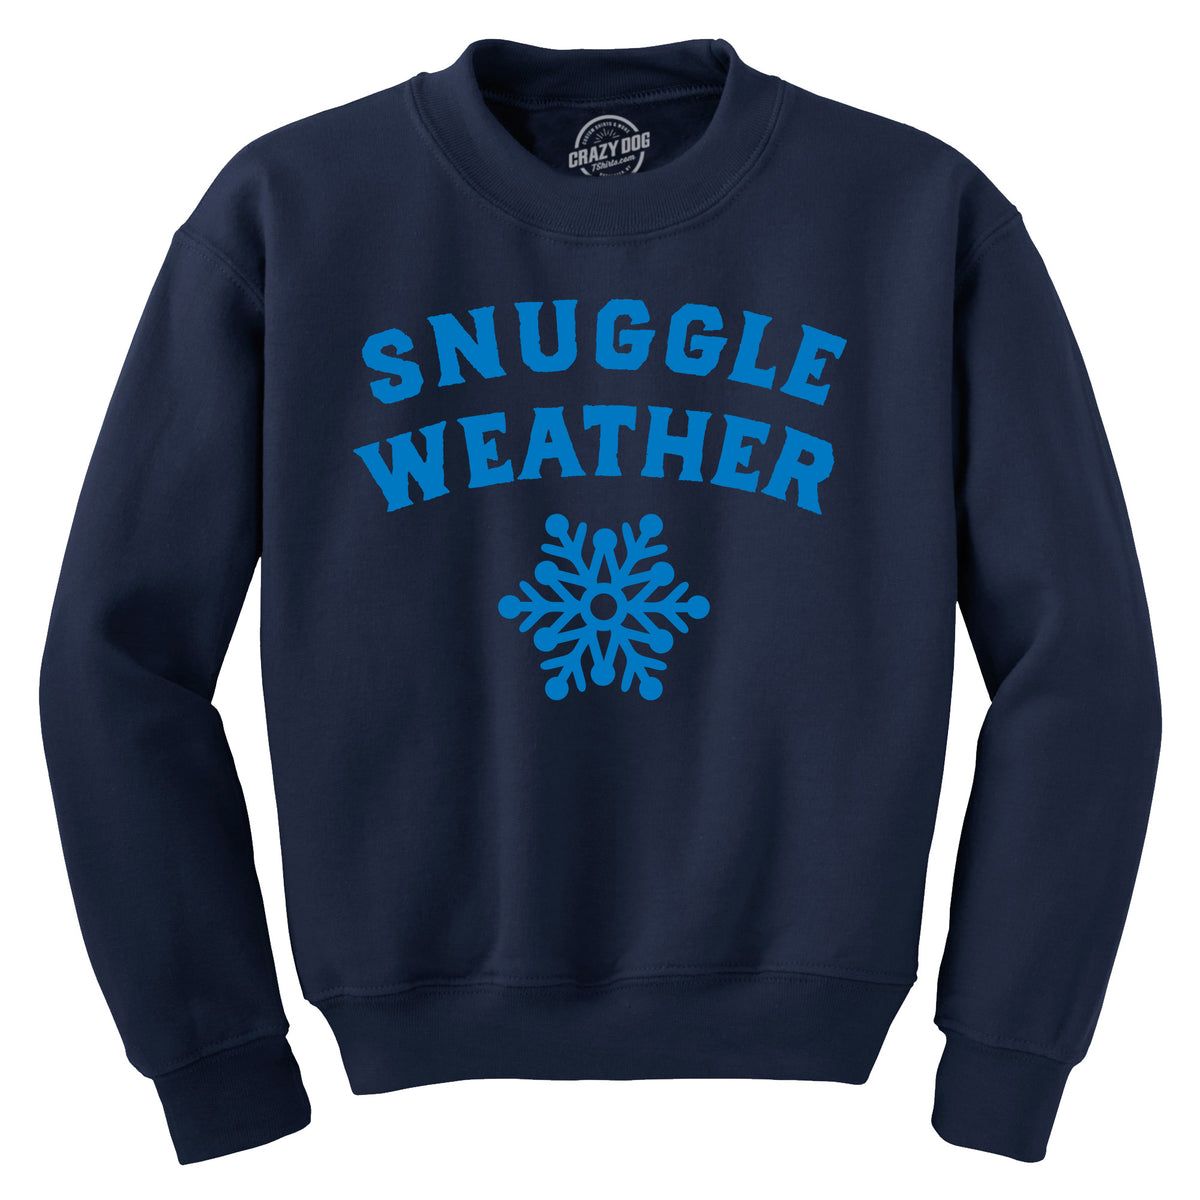 Funny Navy - Snuggle Weather Snuggle Weather Sweatshirt Nerdy Sarcastic Tee